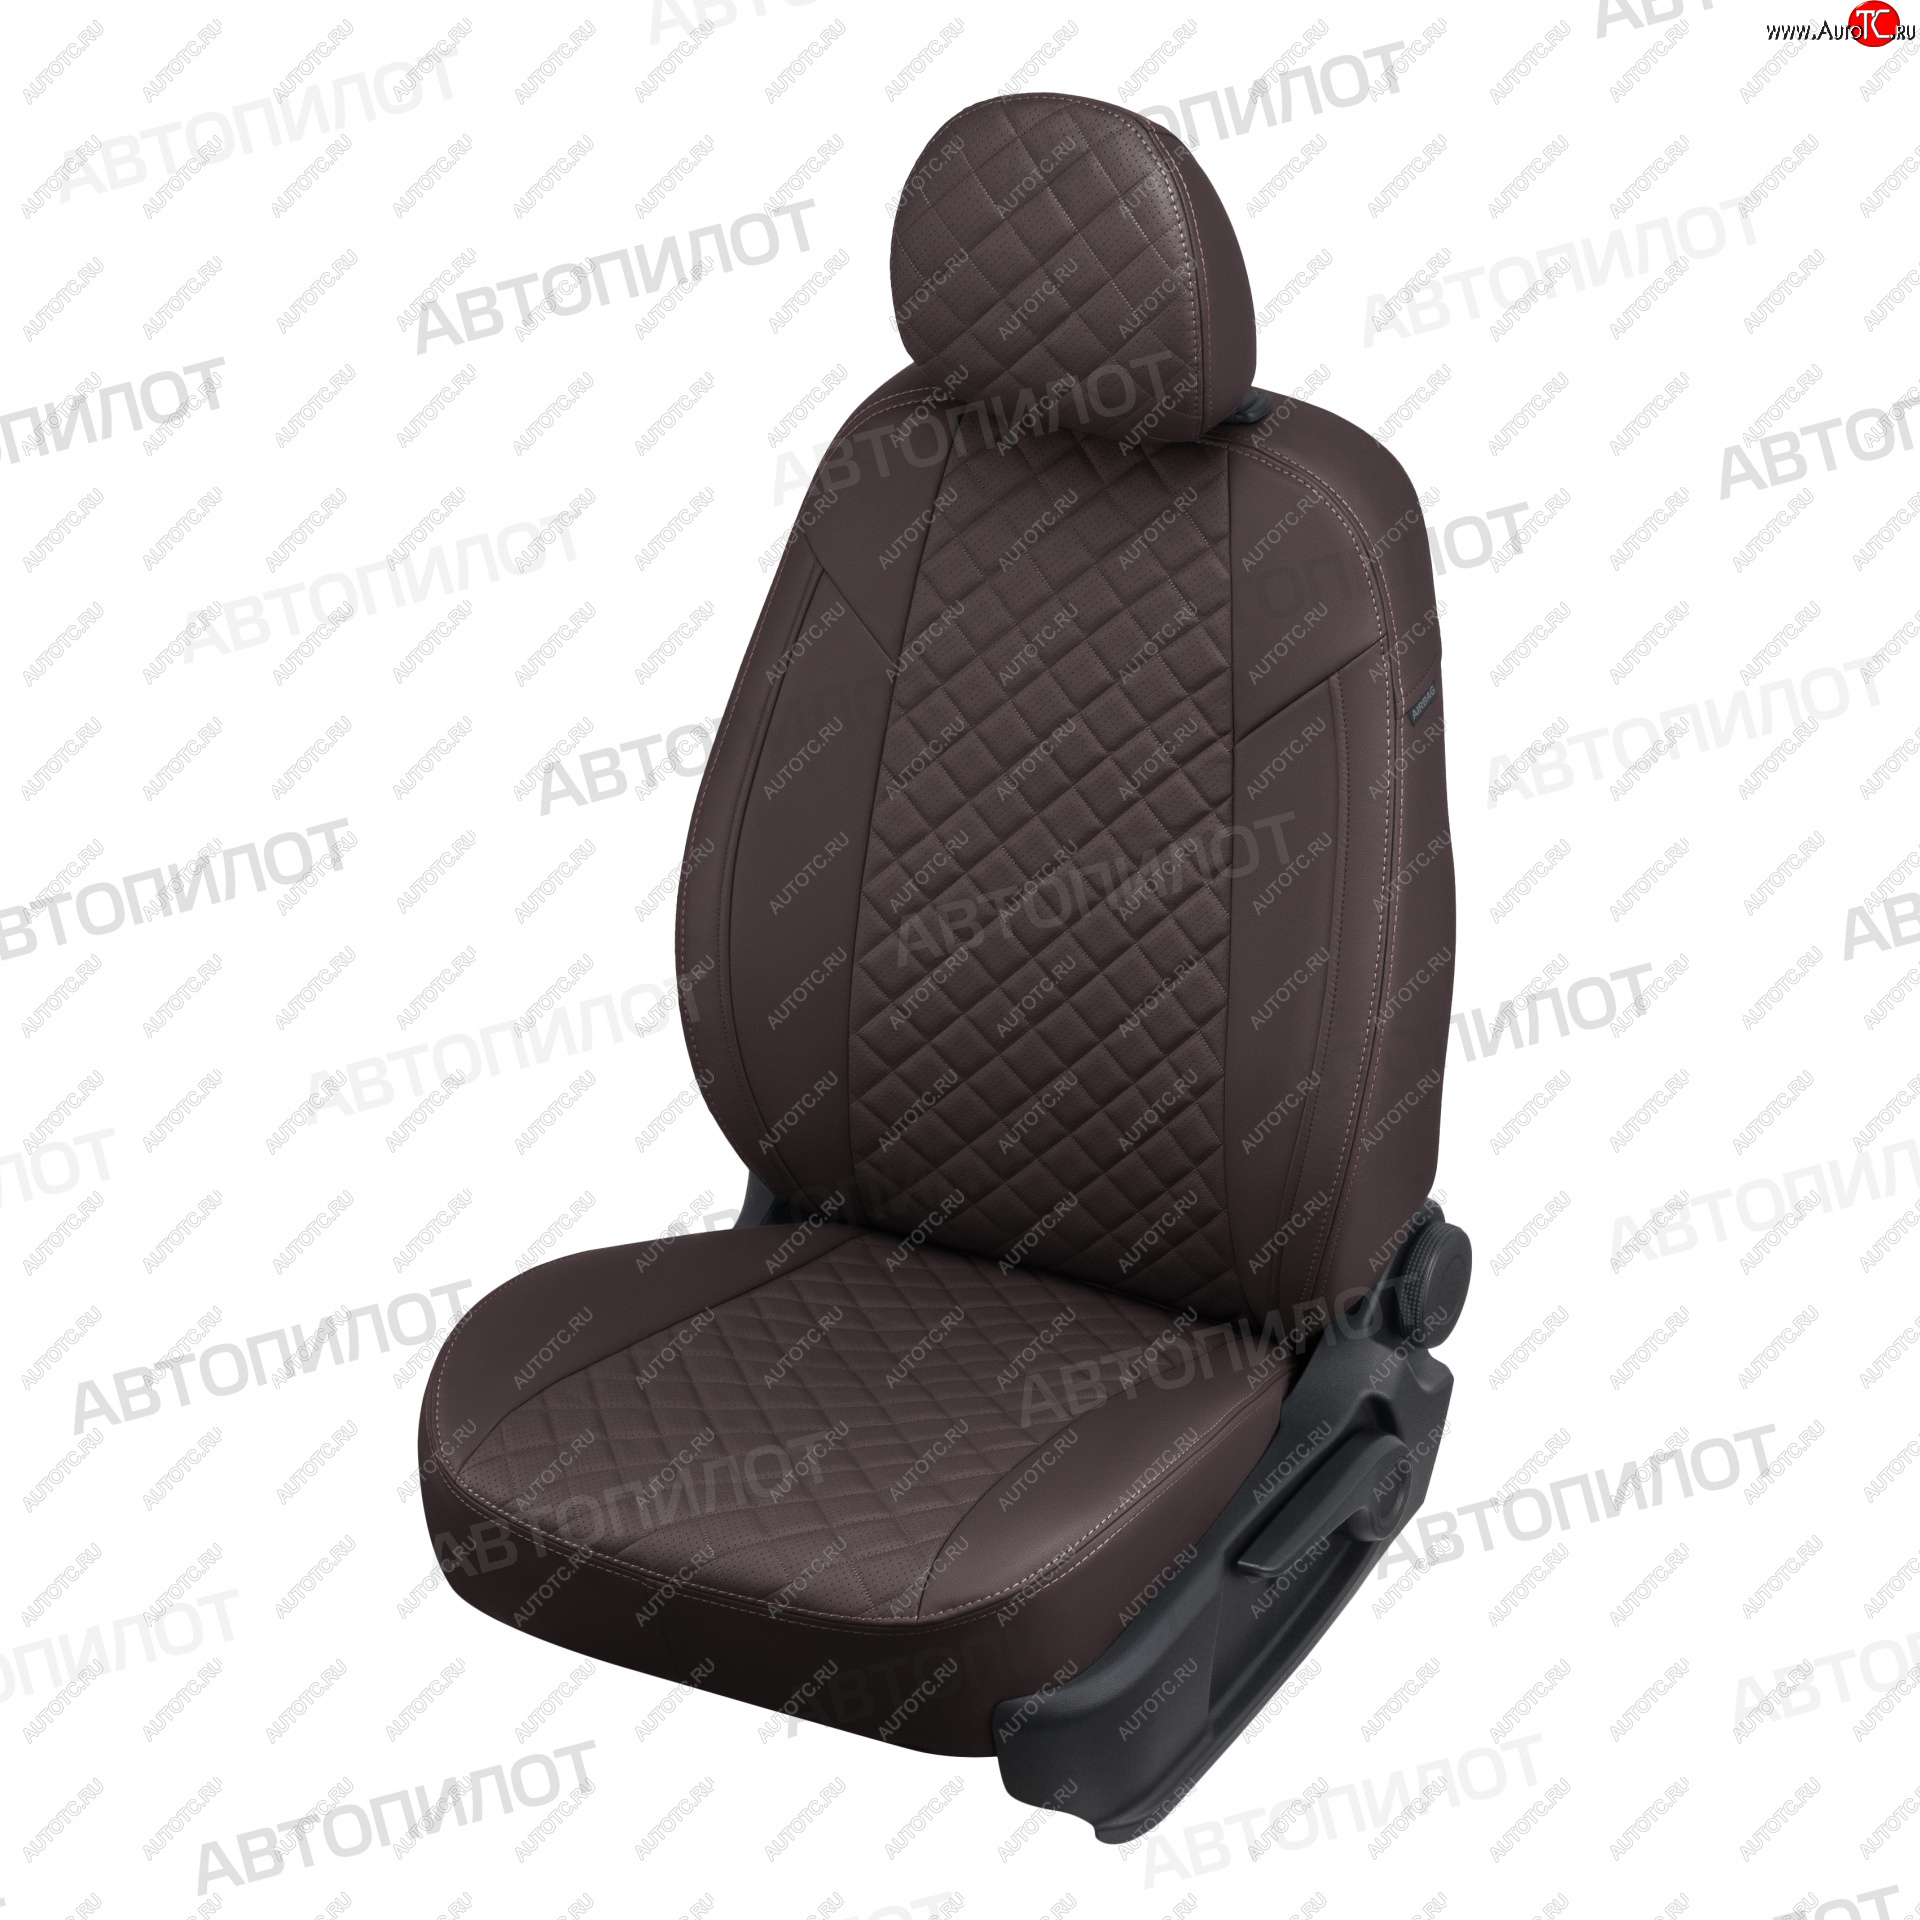 13 999 р. Чехлы сидений (экокожа) Автопилот Ромб  Hyundai Terracan  1 HP (2001-2007) (шоколад)